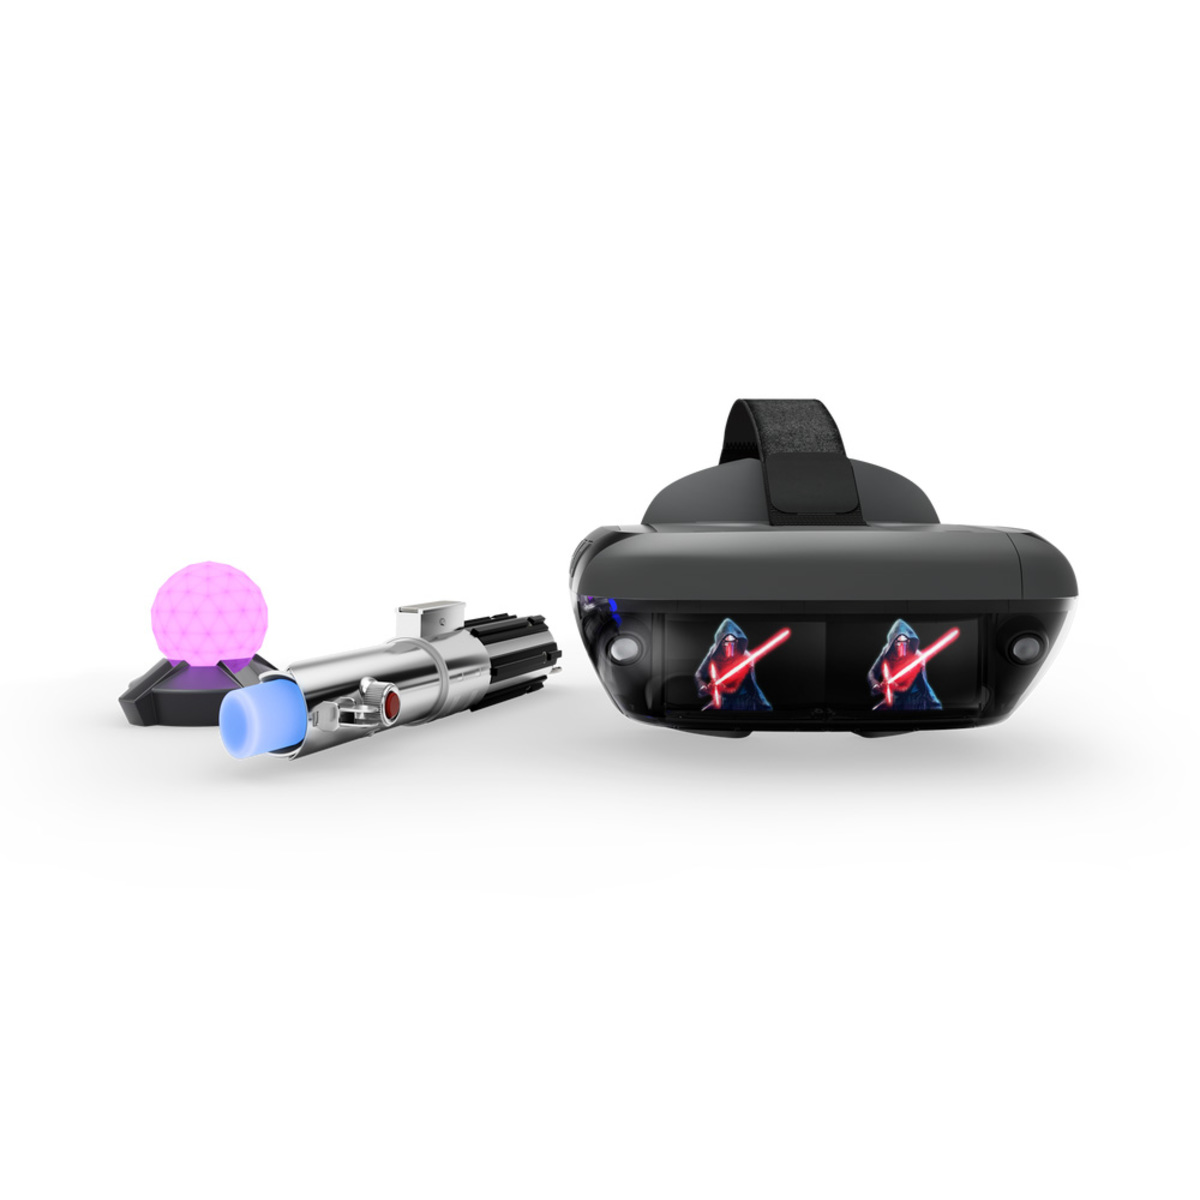 Lenovo Star Wars VR Headset Challengeimage on white background